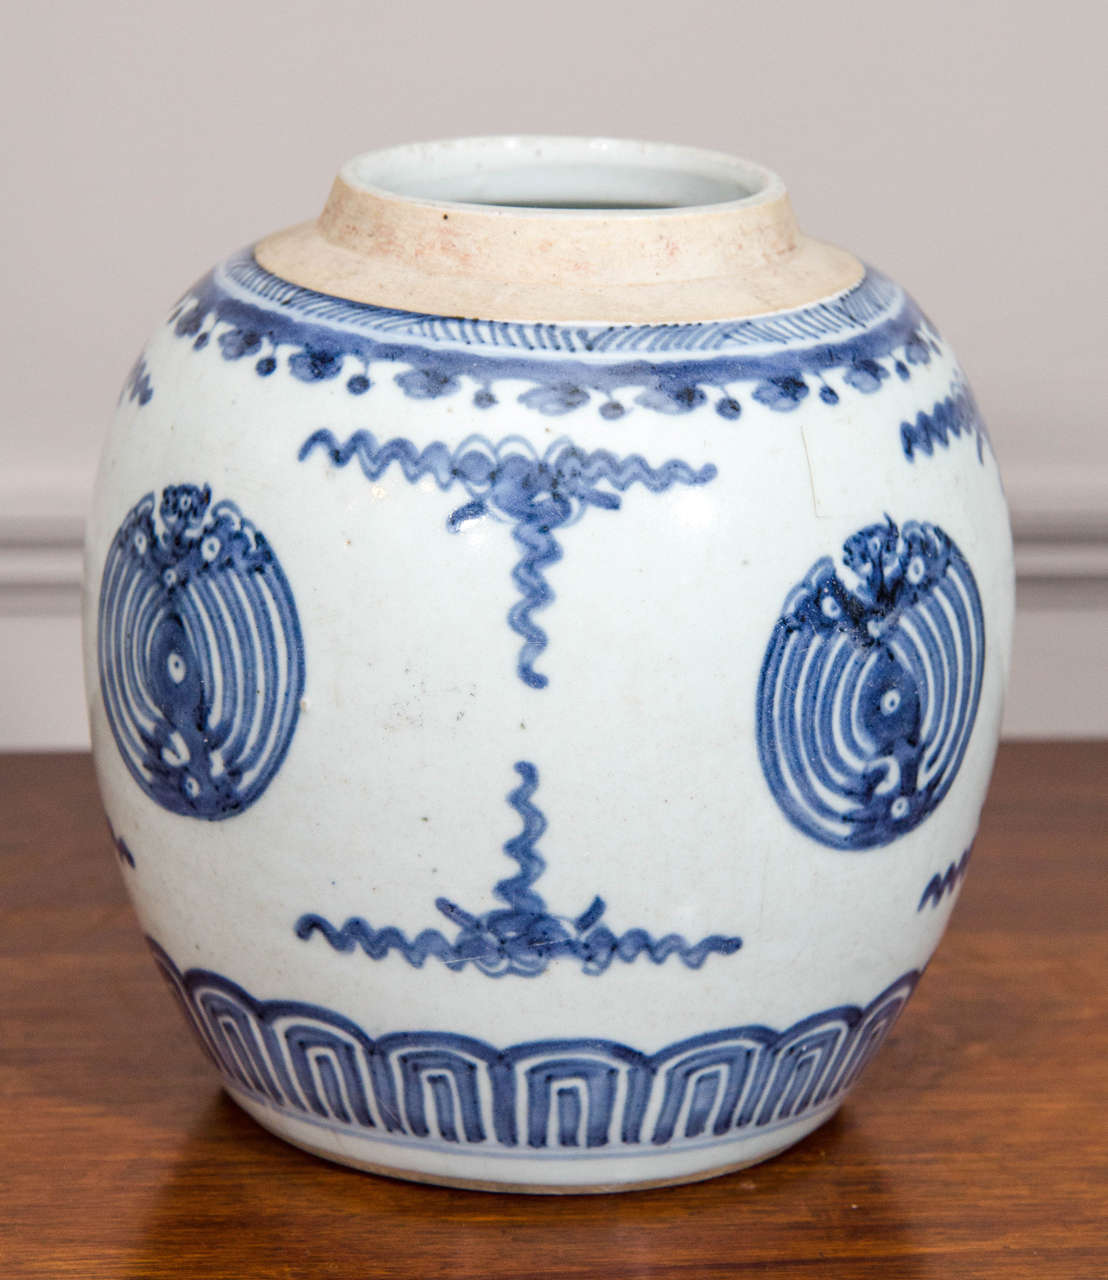 Blue and white porcelain jar.